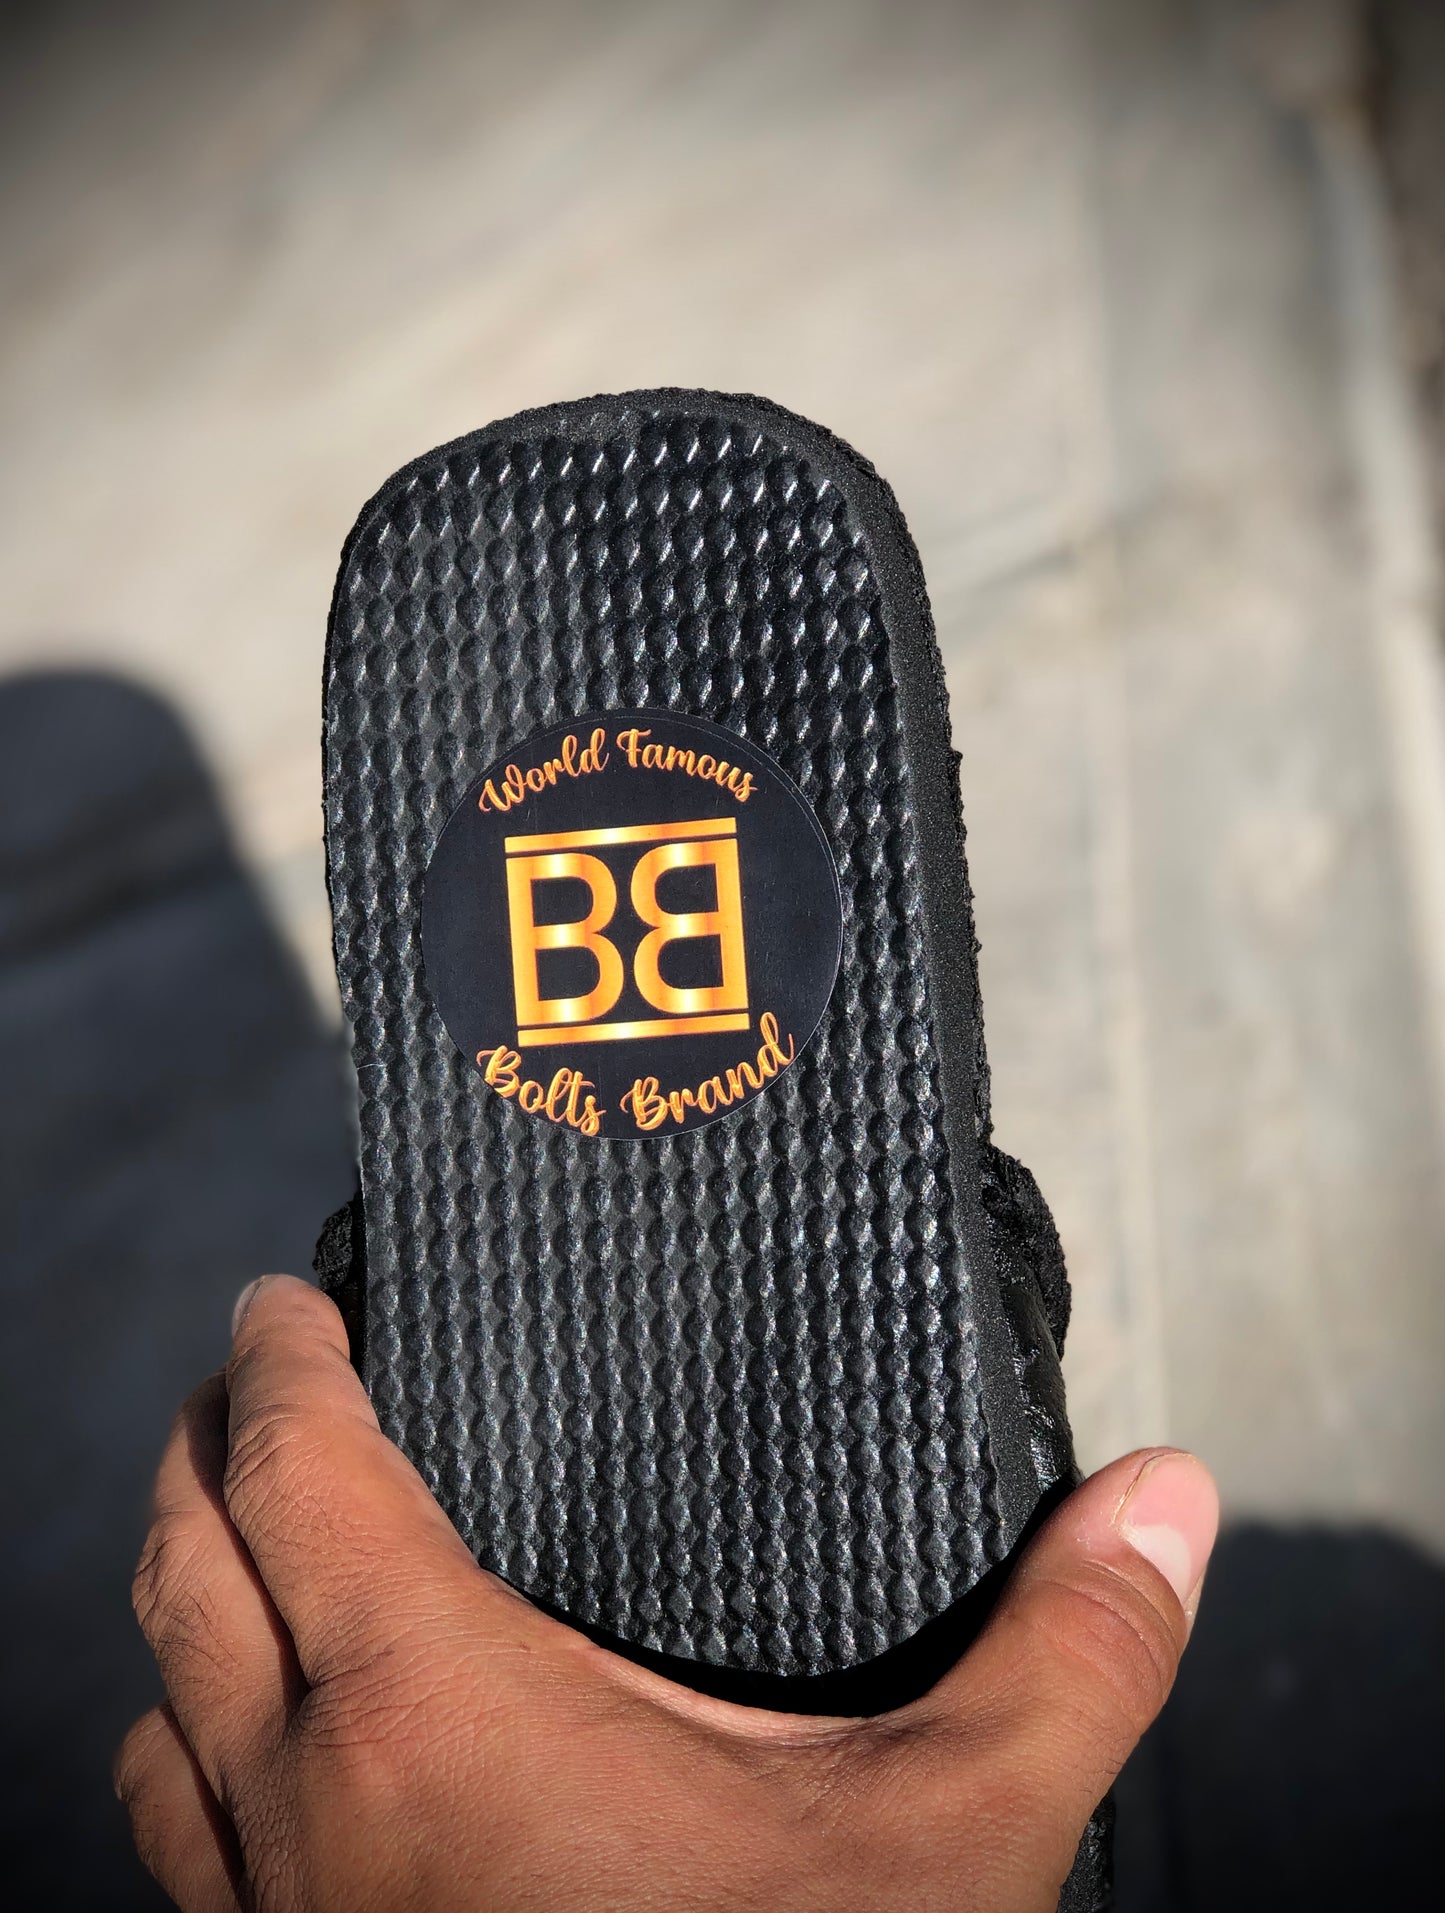 BB (cc) slippers